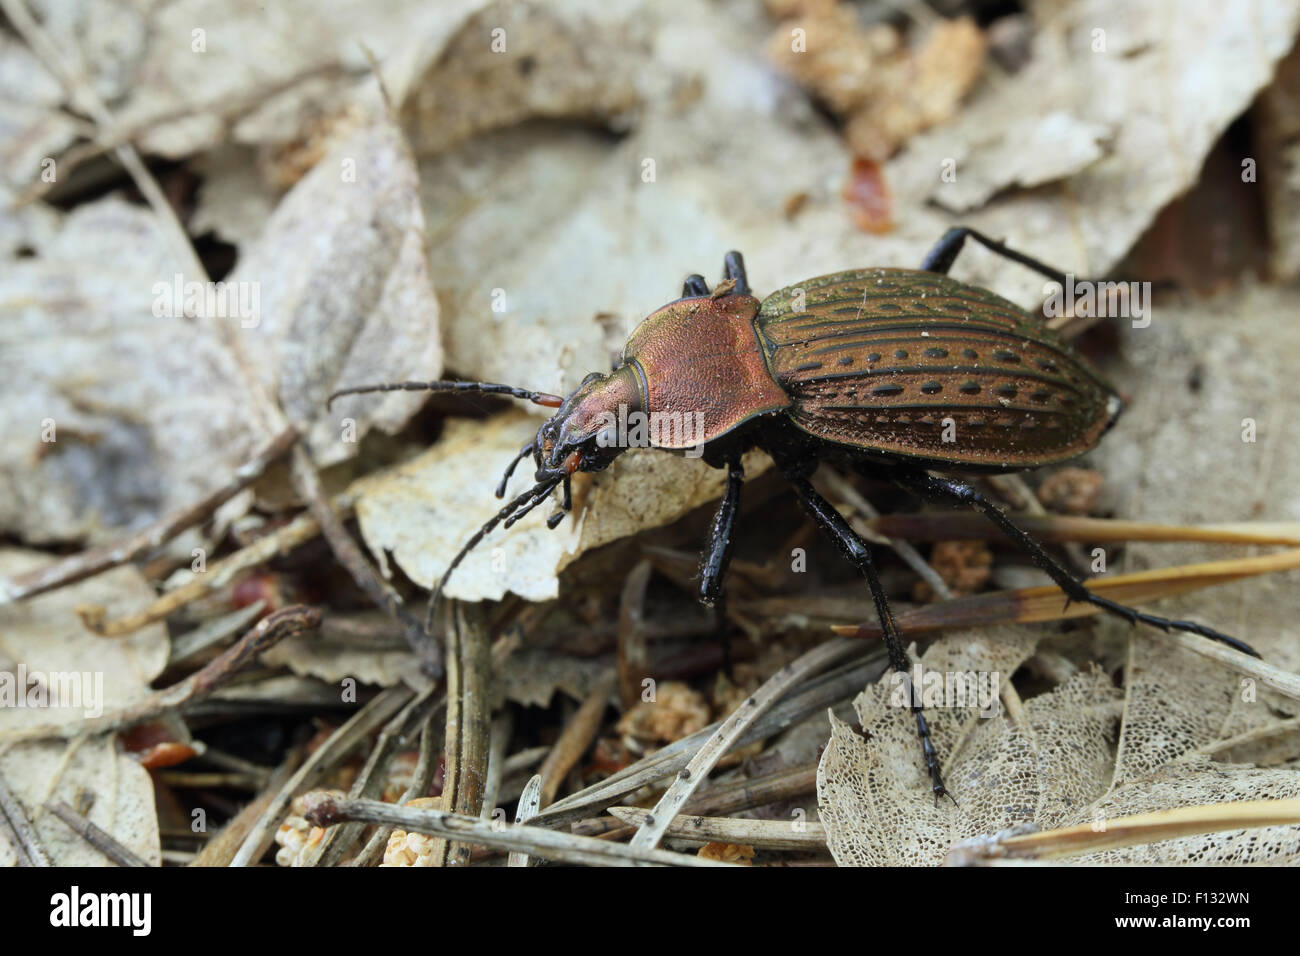 Carabus cancellatus a central european ground beetle Stock Photo